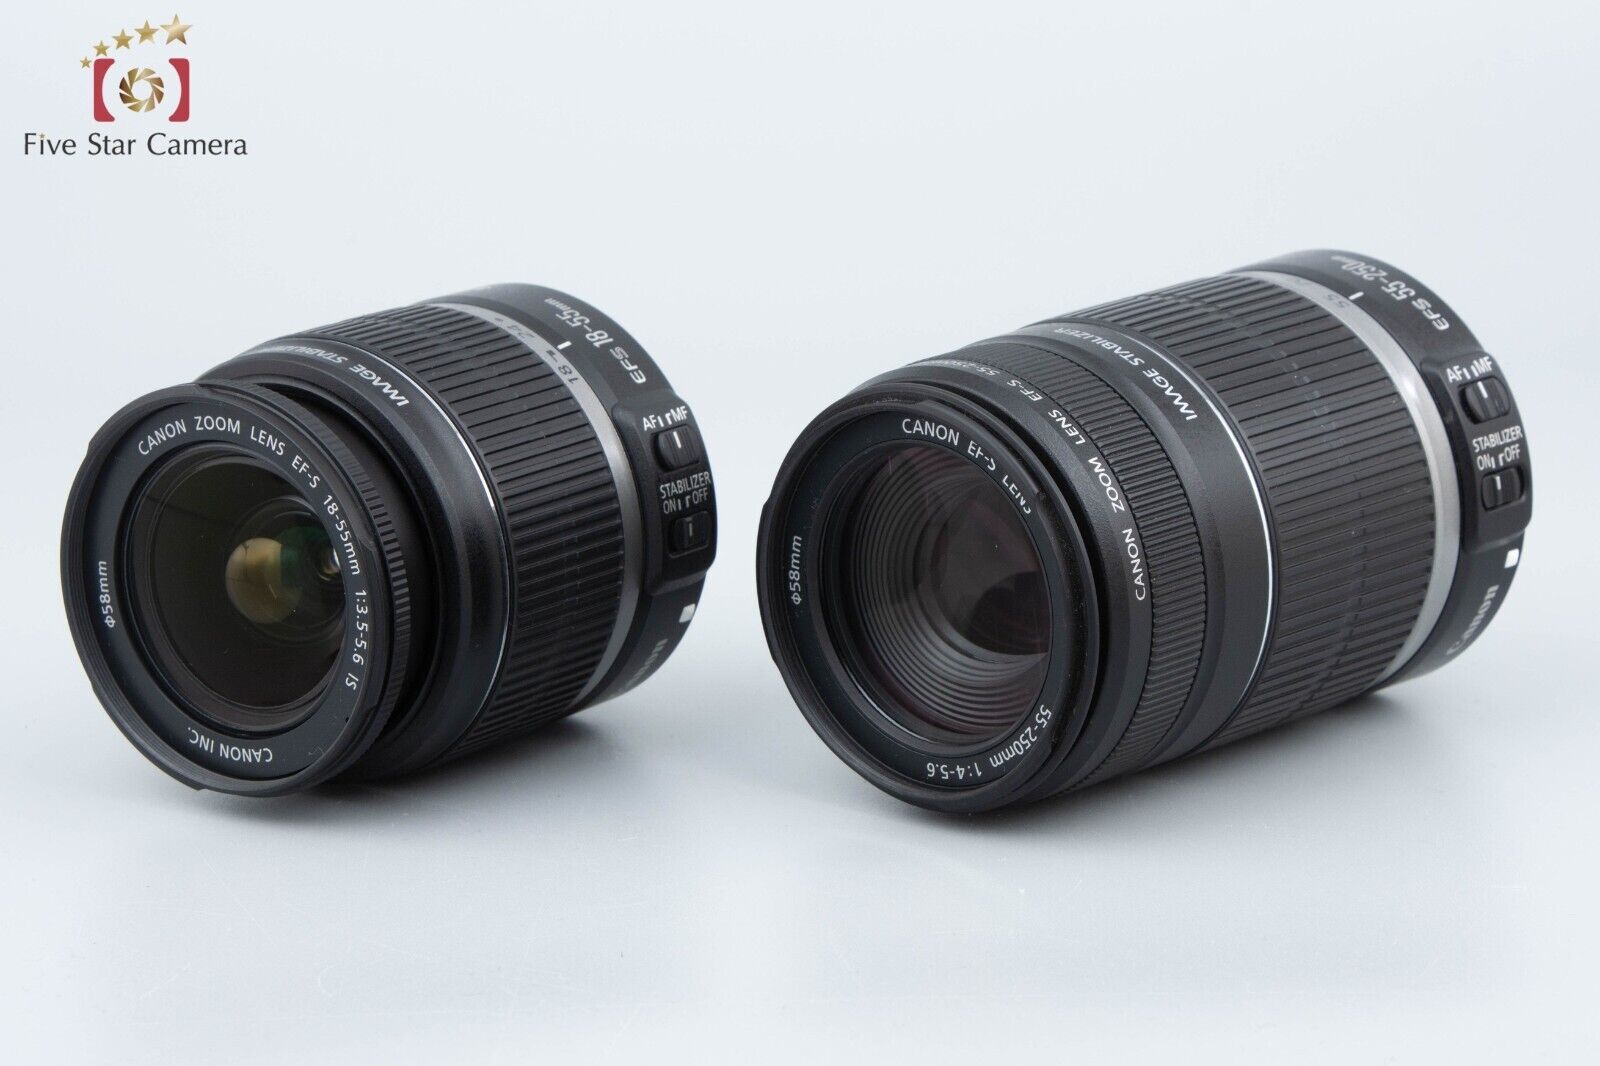 "Count 382" Canon EOS Kiss X7 / Rebel SL1 / 100D 18.0MP EF-S 18-55 55-250 Lenses